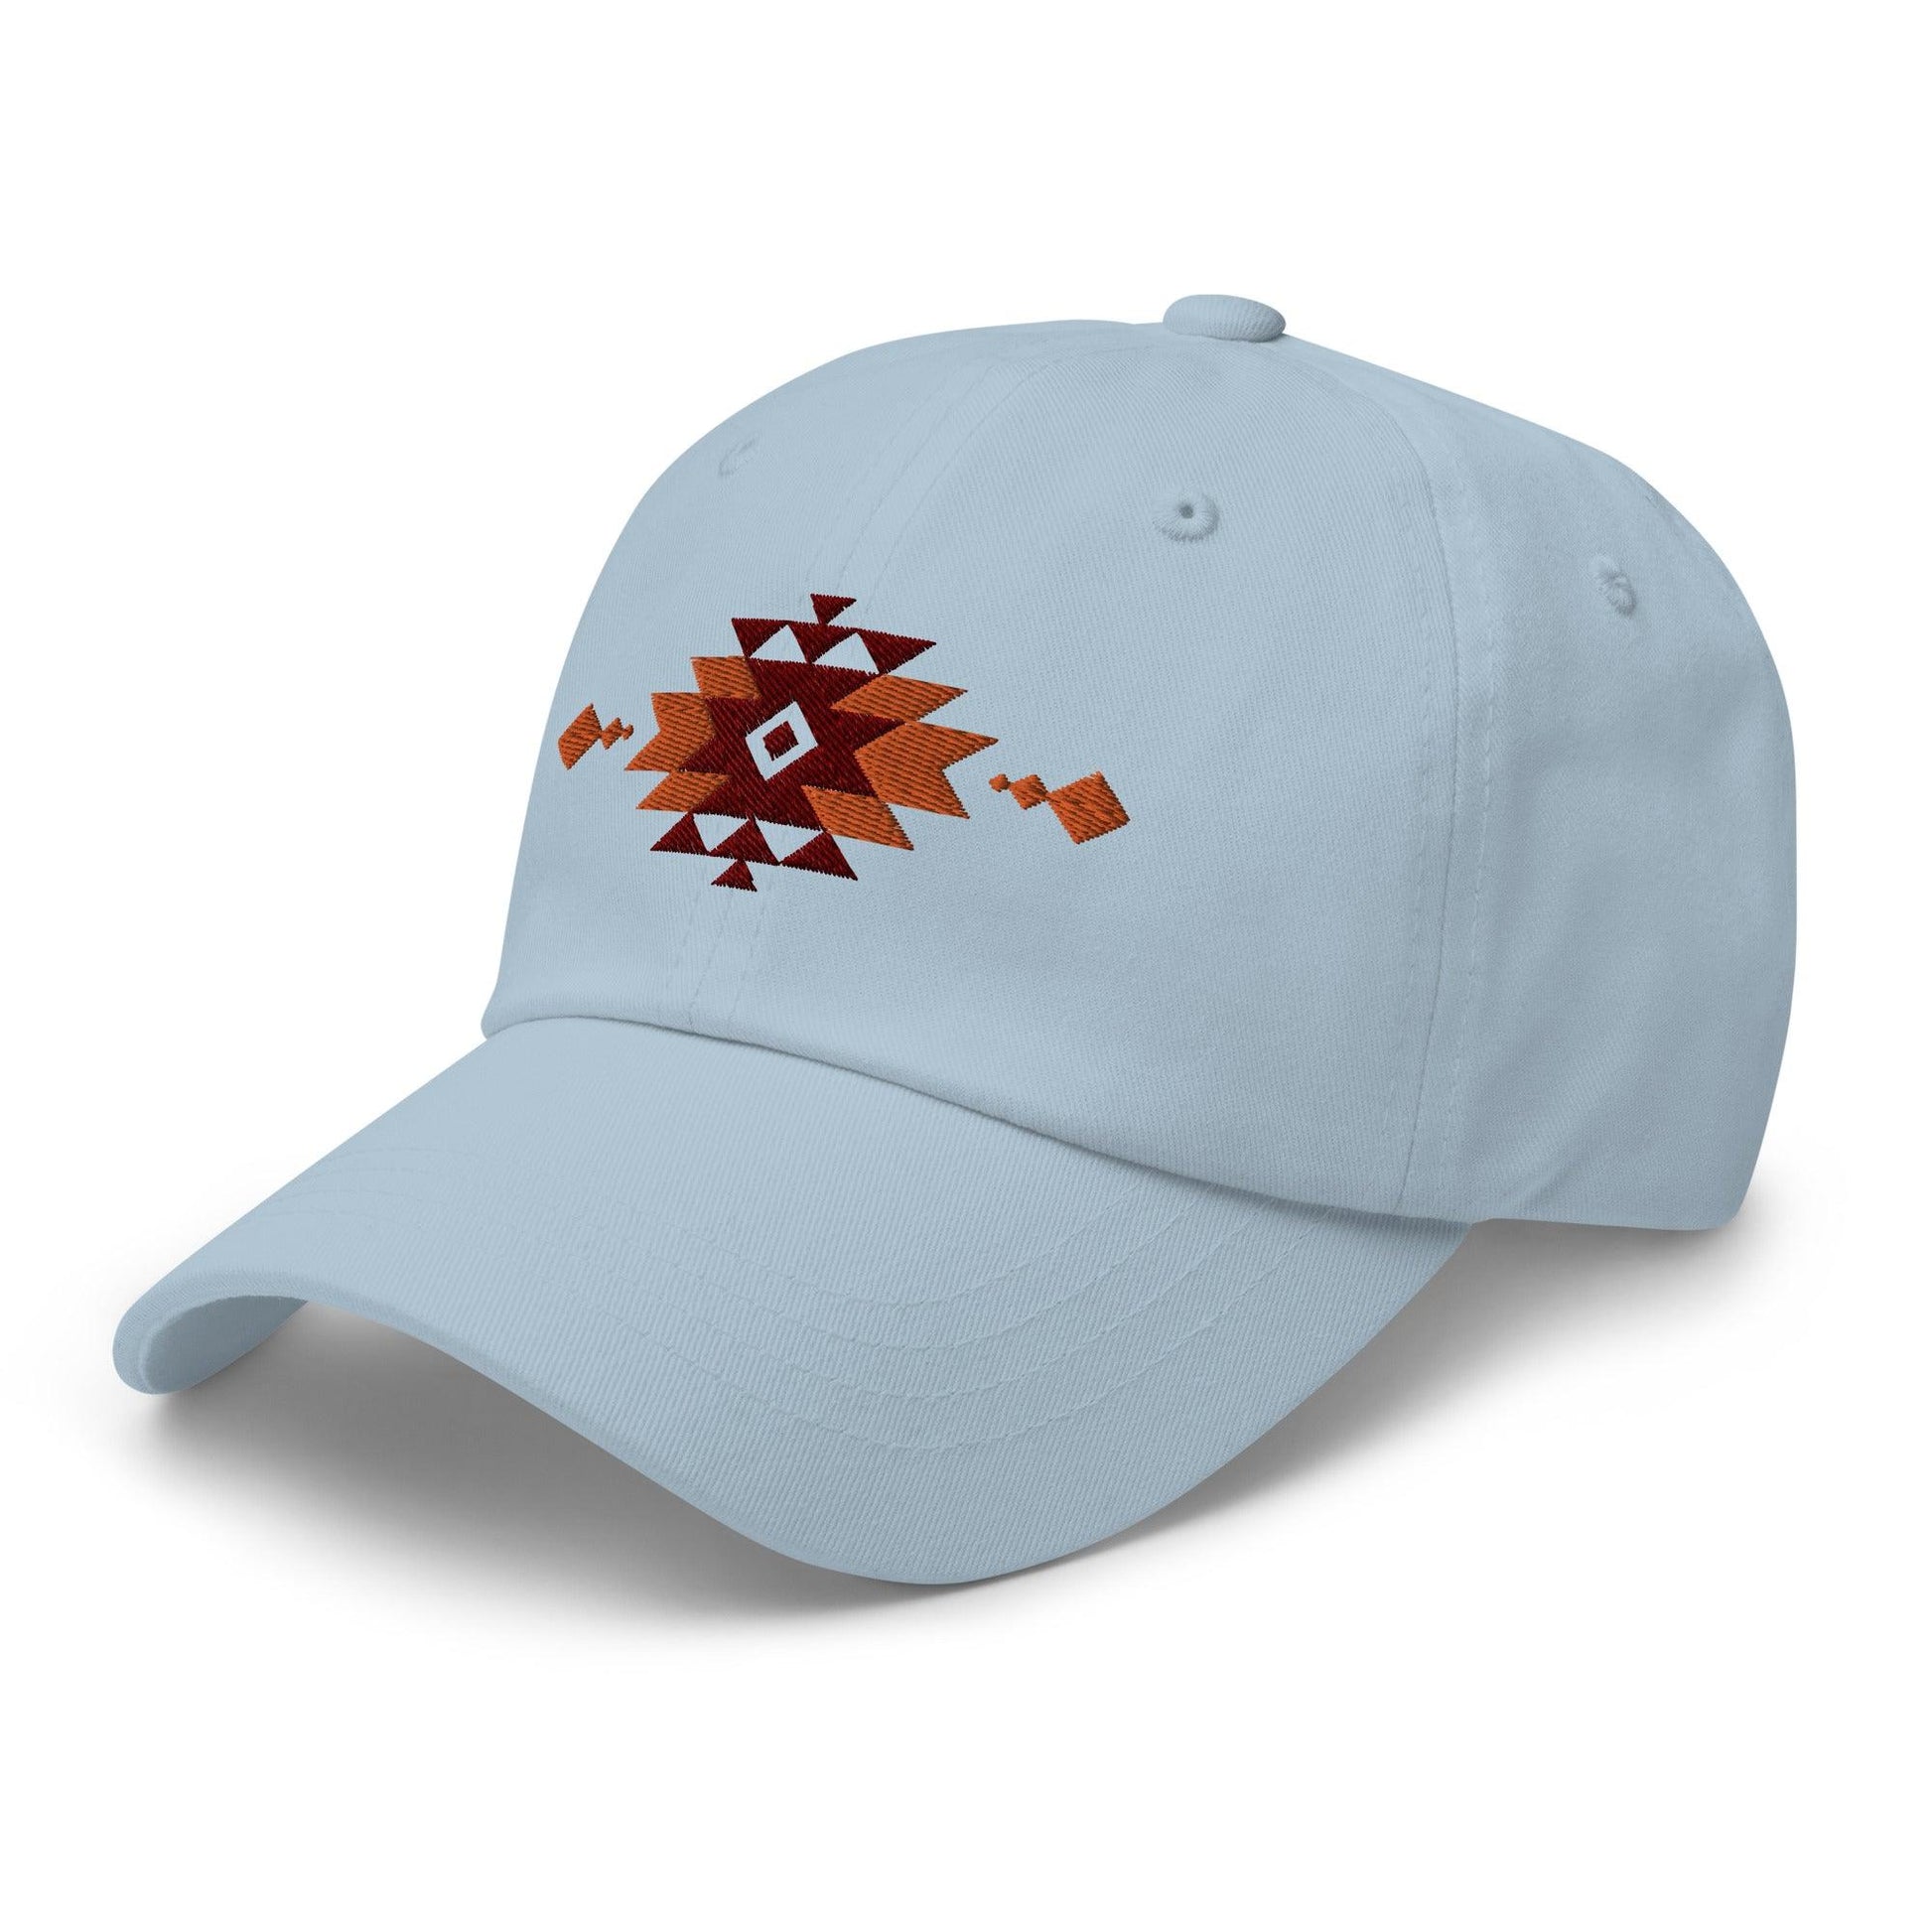 Southwestern Embroidered Dad Hat - The Global Wanderer